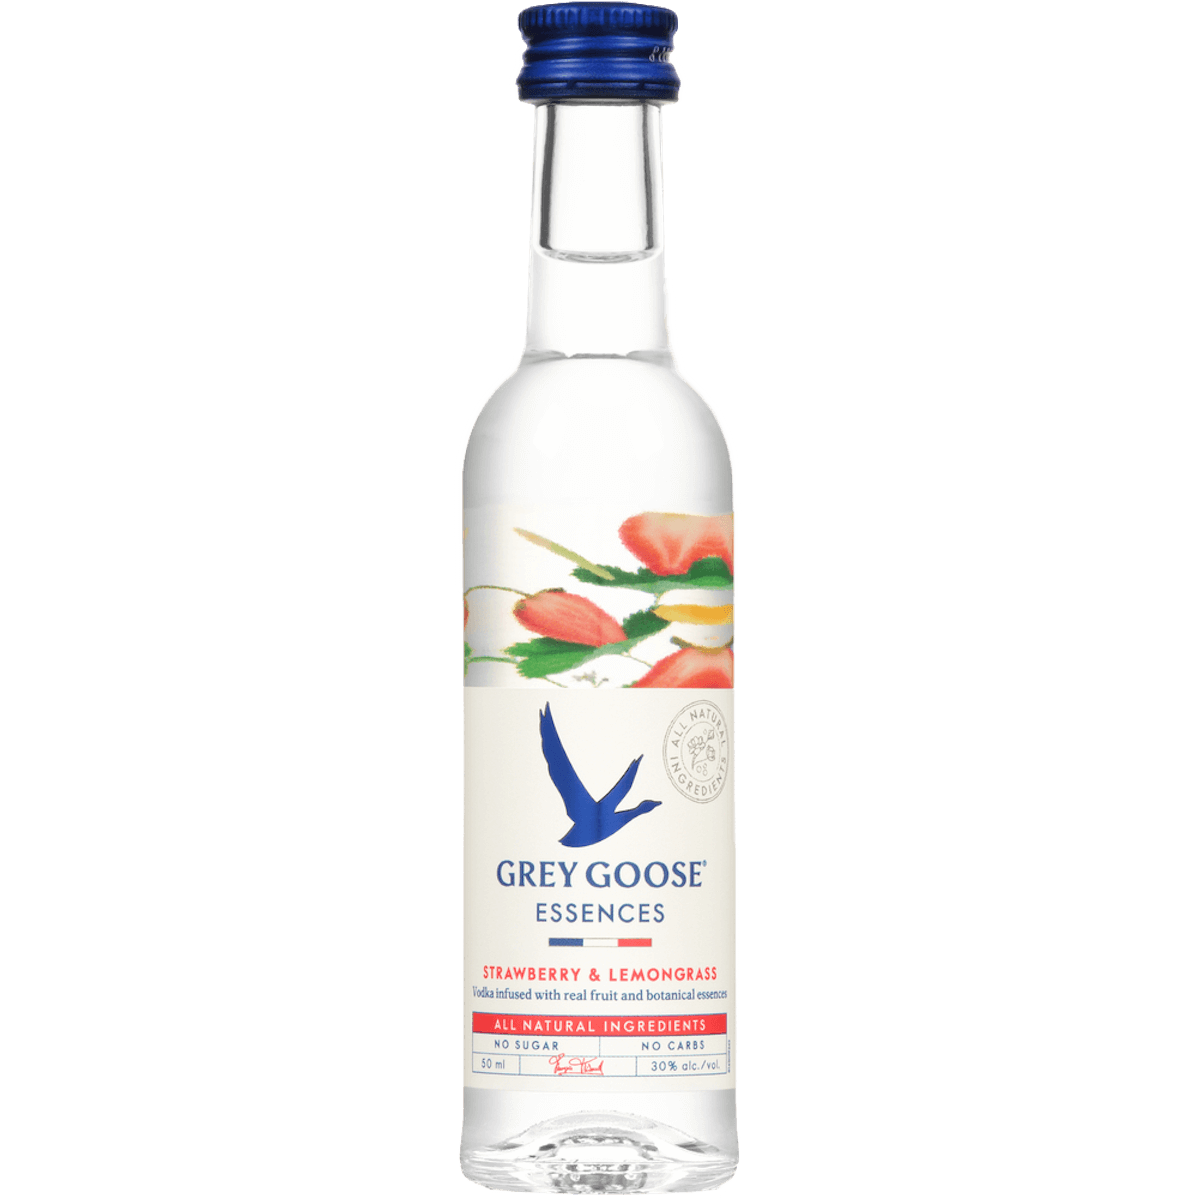 Grey Goose 'Essences' Flavored Vodka